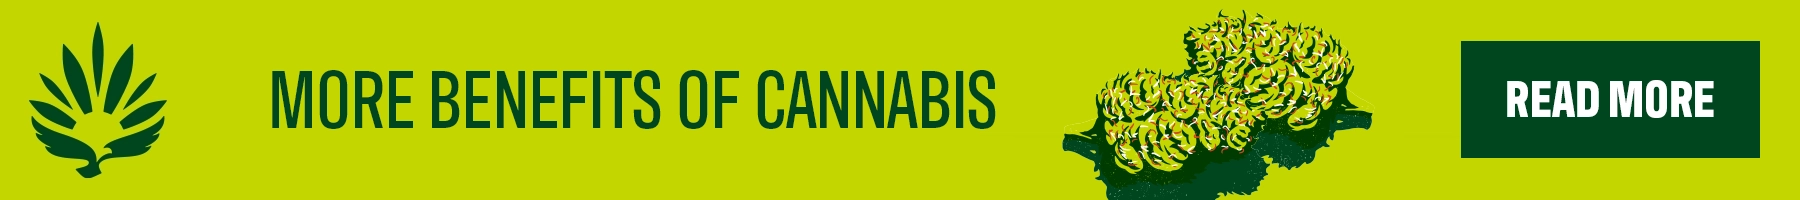 Cannabis-benefits